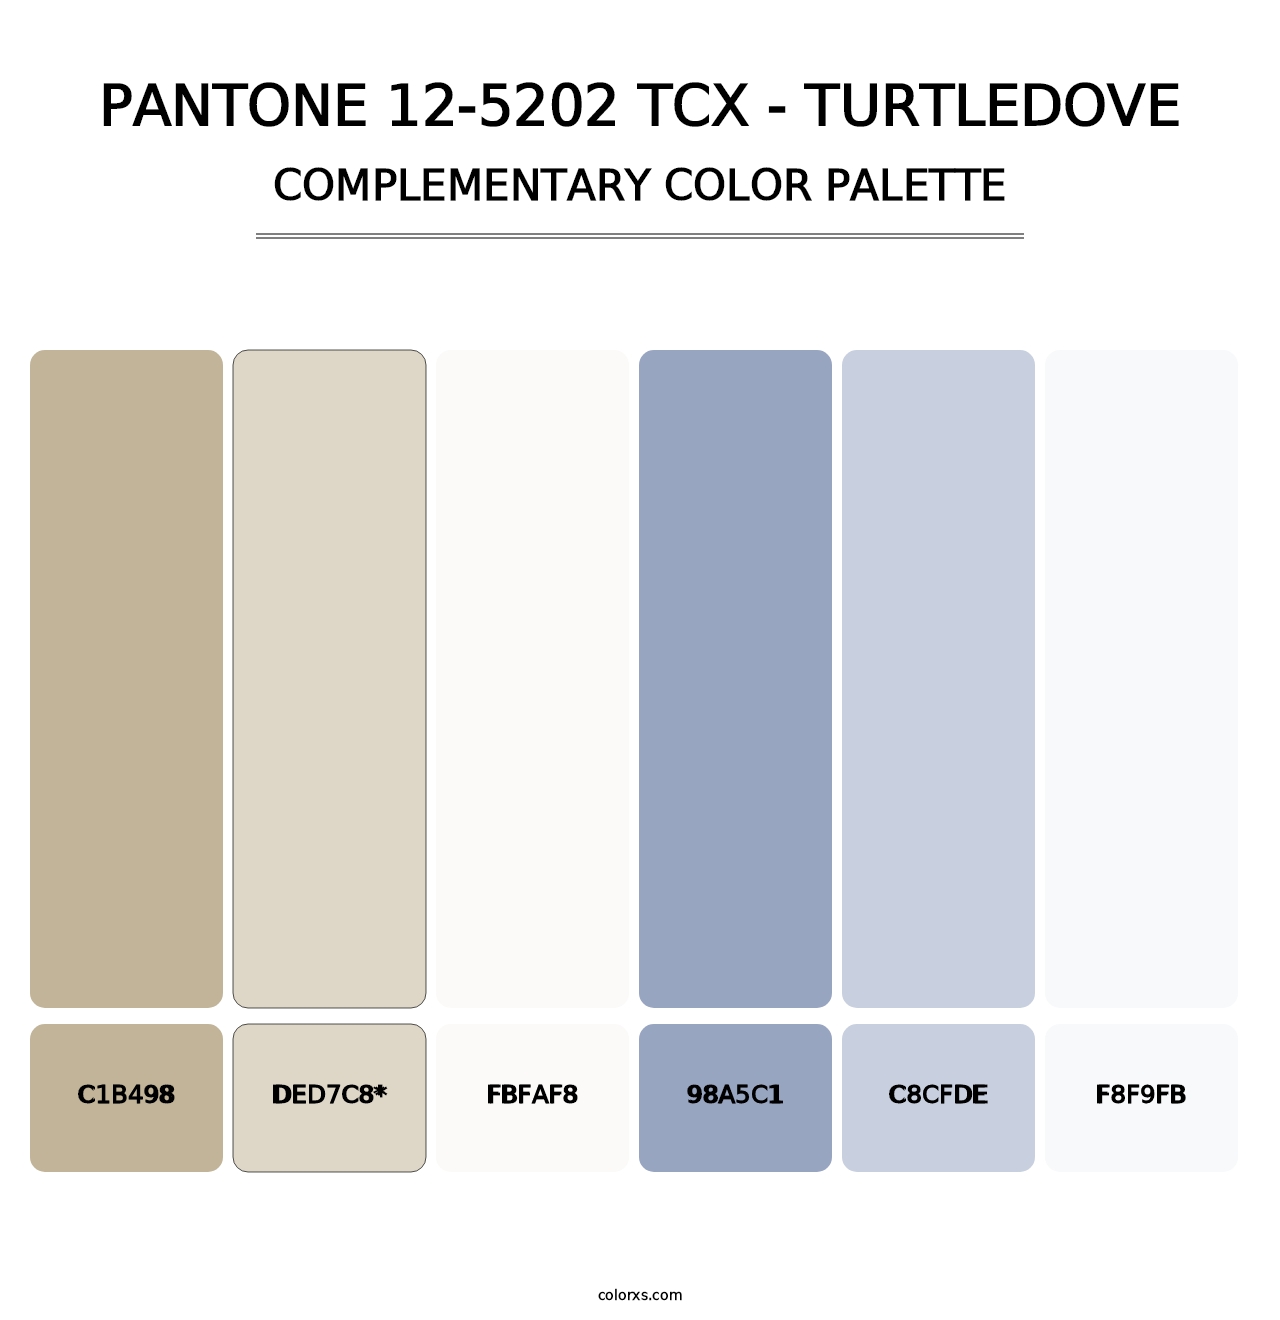 PANTONE 12-5202 TCX - Turtledove - Complementary Color Palette